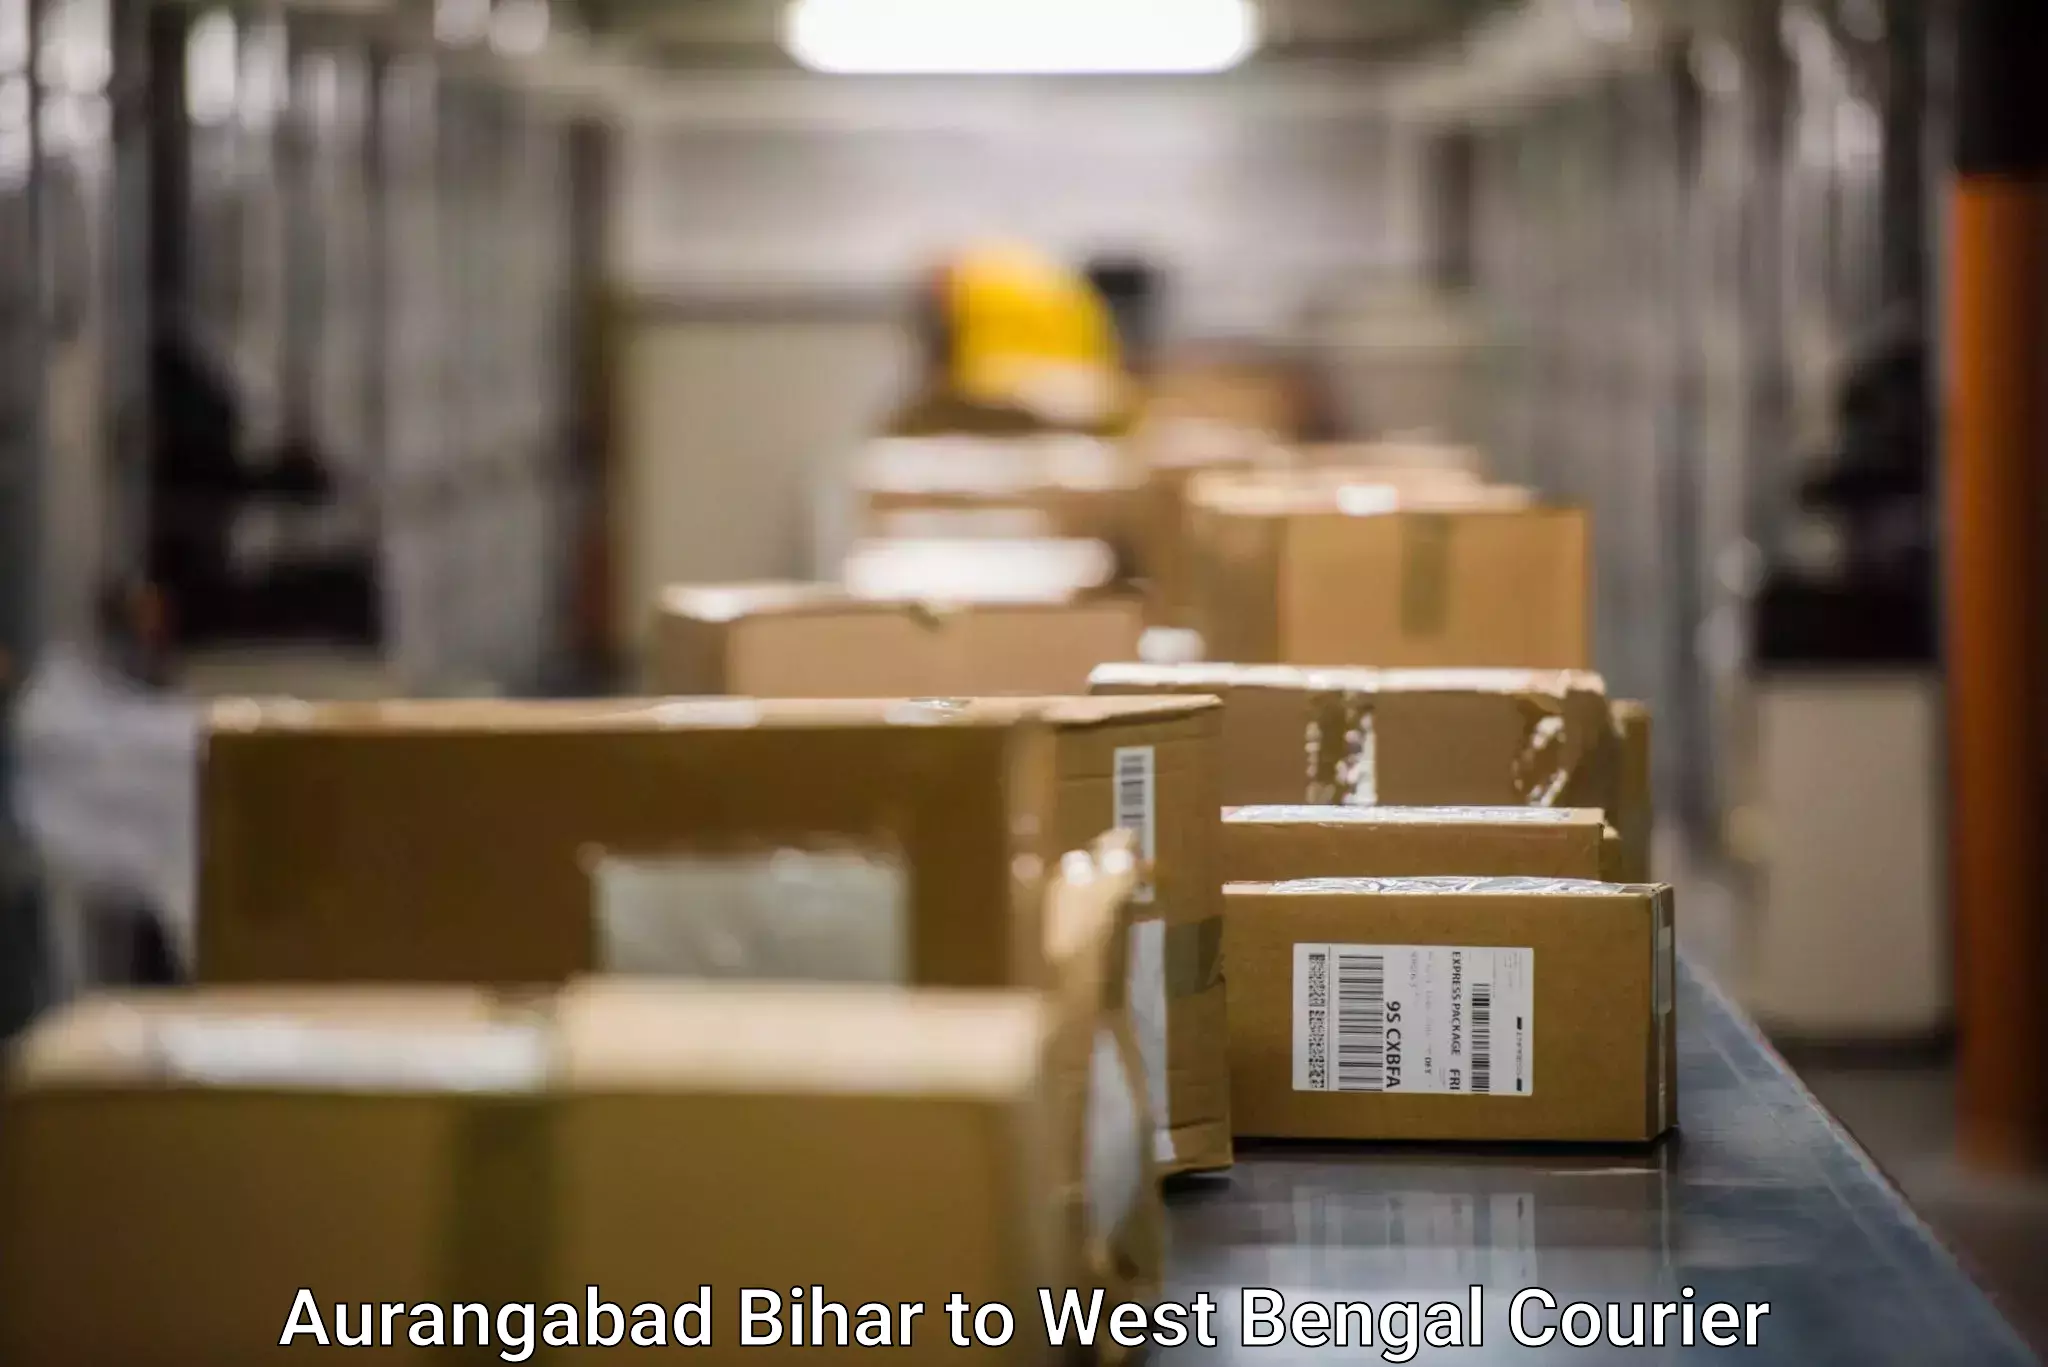 Pharmaceutical courier Aurangabad Bihar to Bamangola